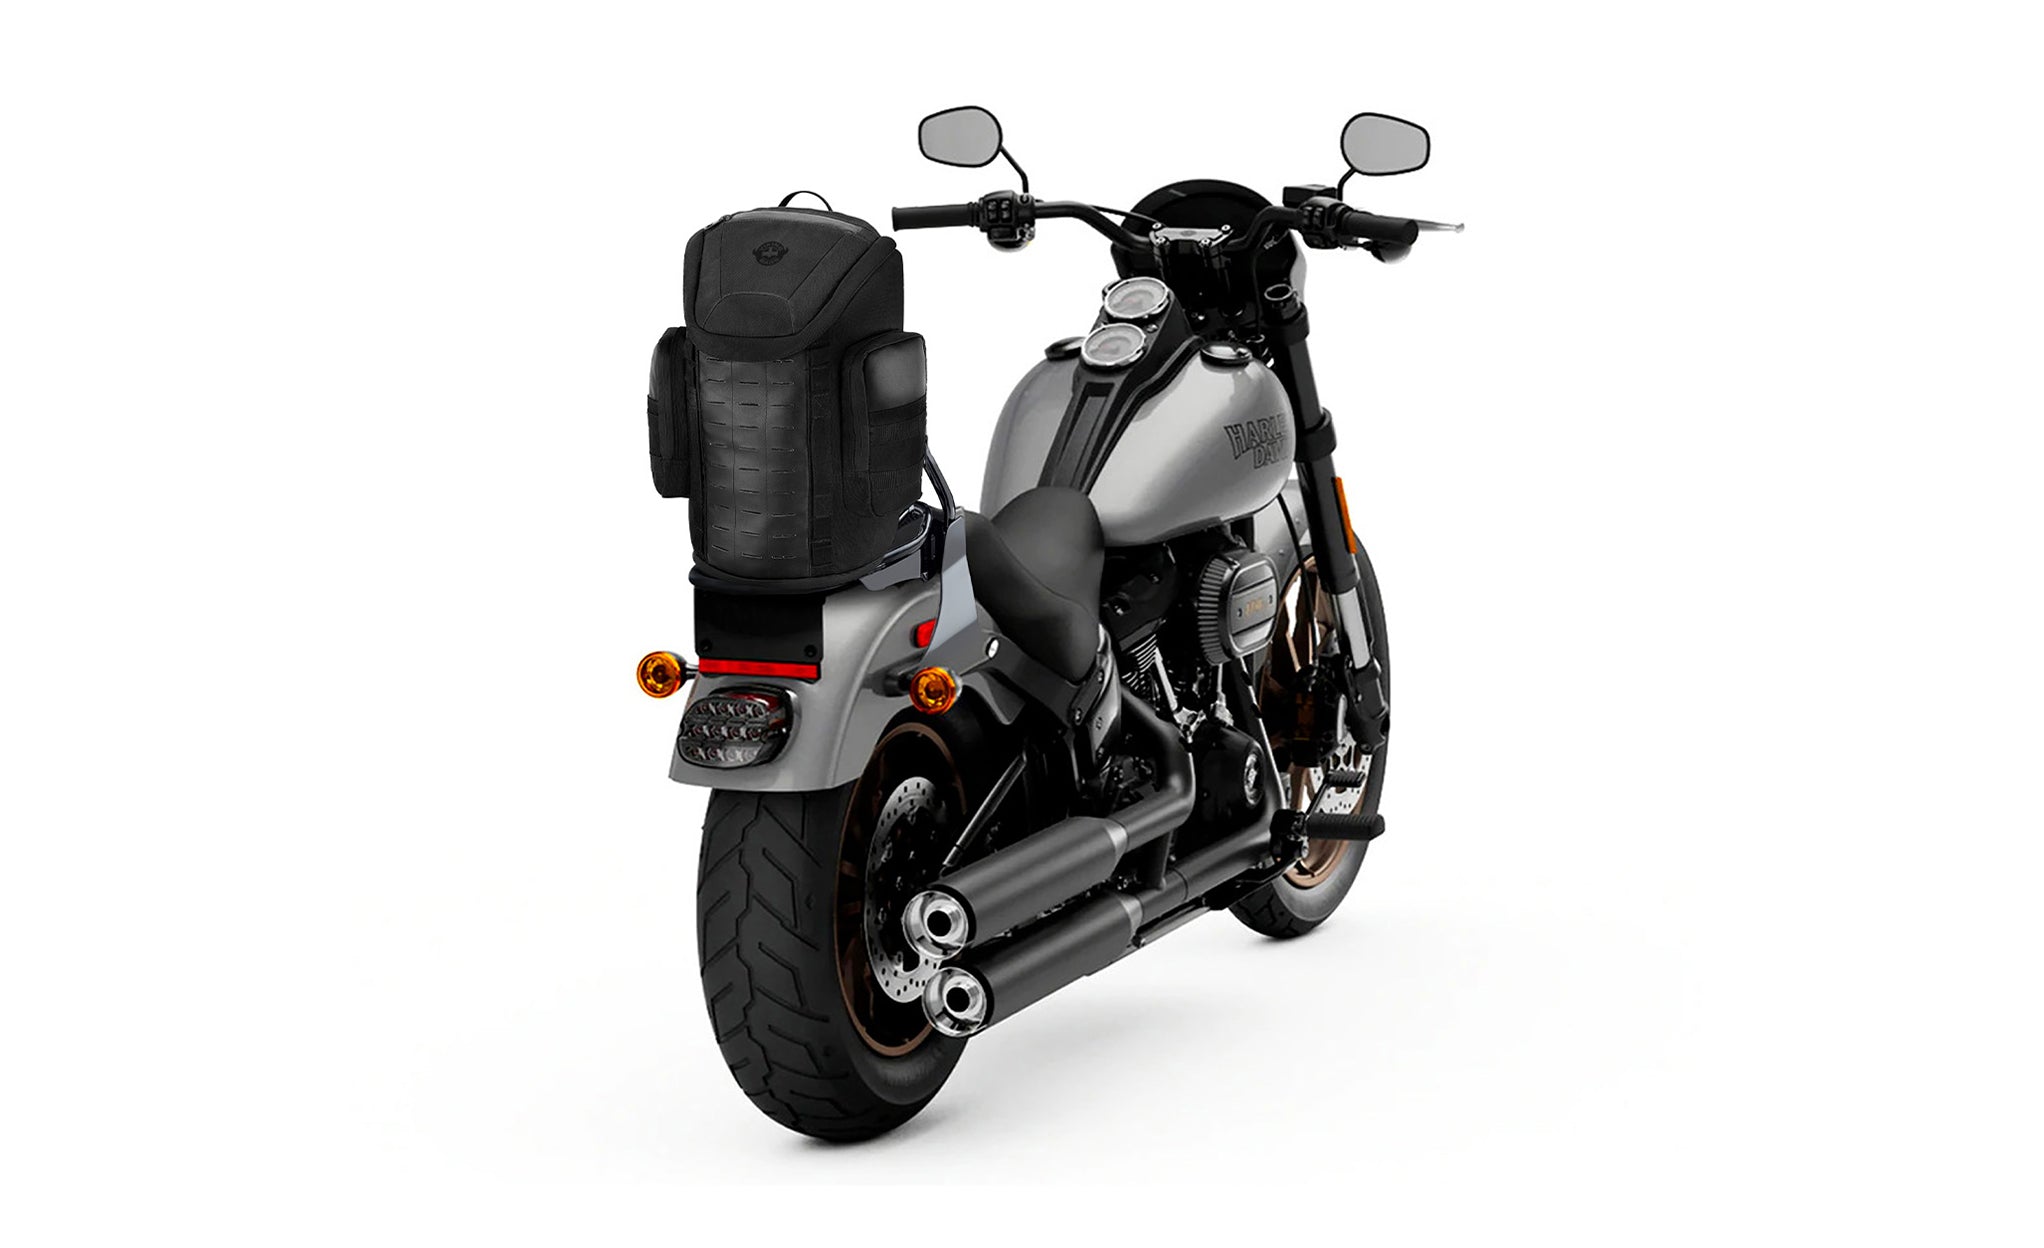 Viking Patriot Medium Honda Motorcycle Sissy Bar Backpack Bag on Bike View @expand